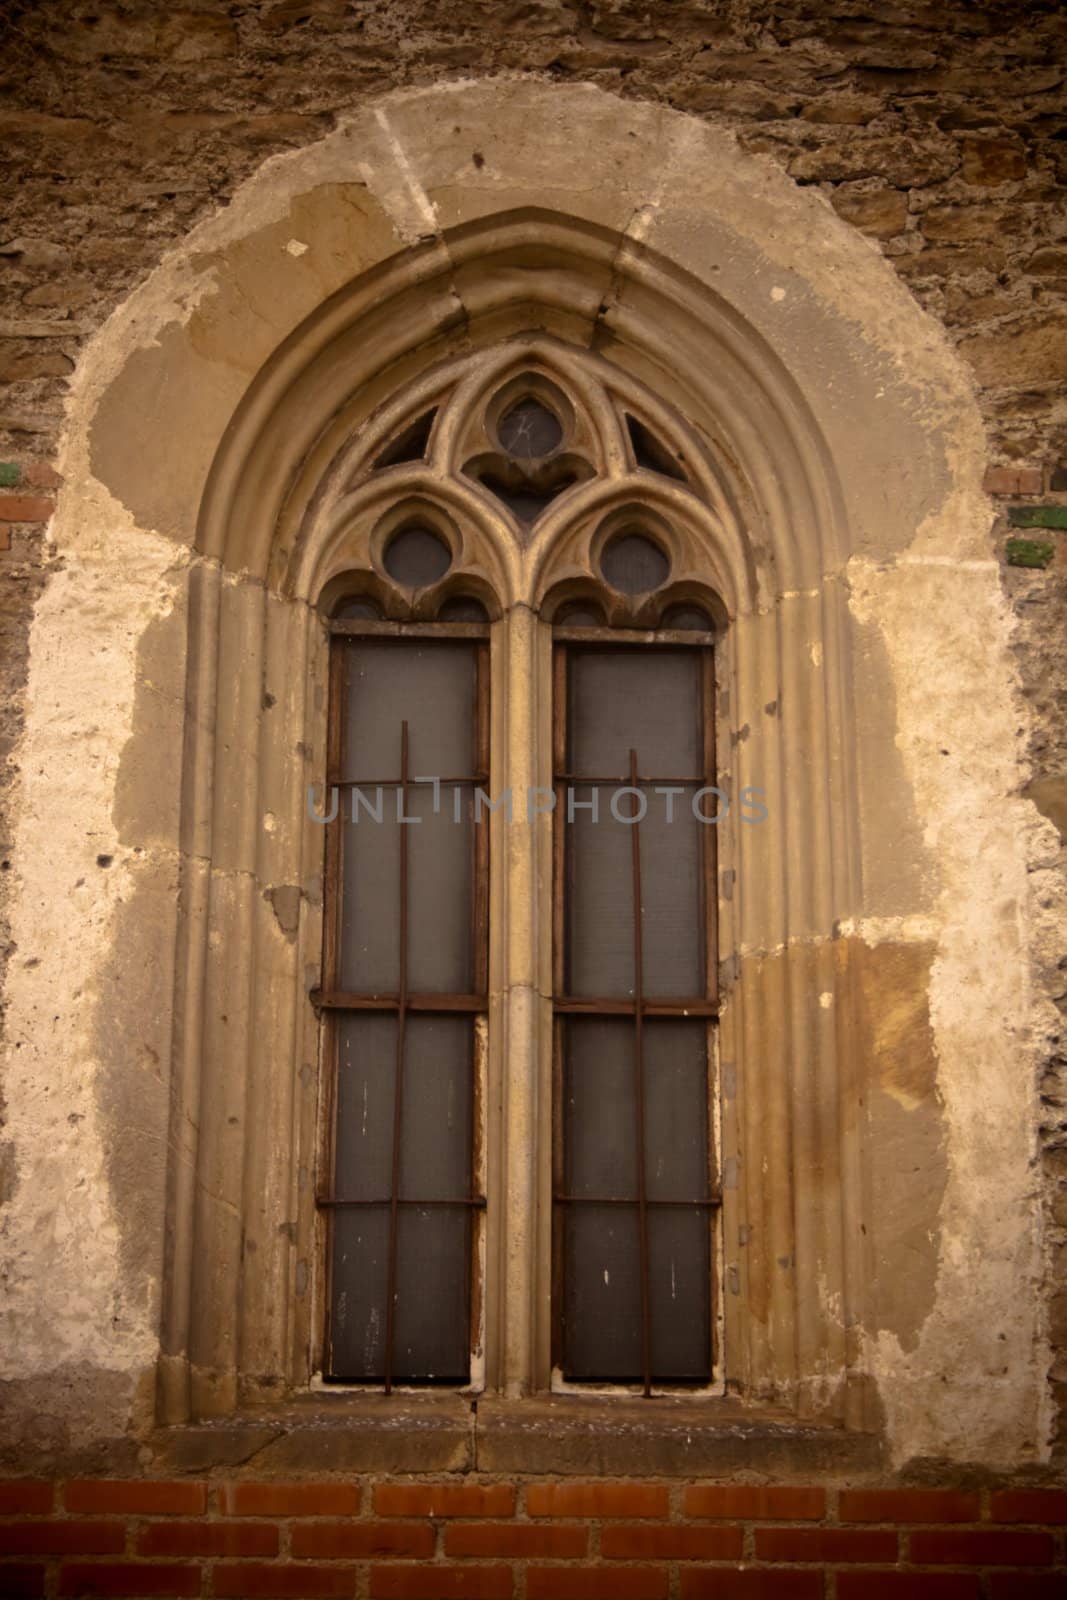 Beautiful stone thin window with Gothic archs, stone bricks surround